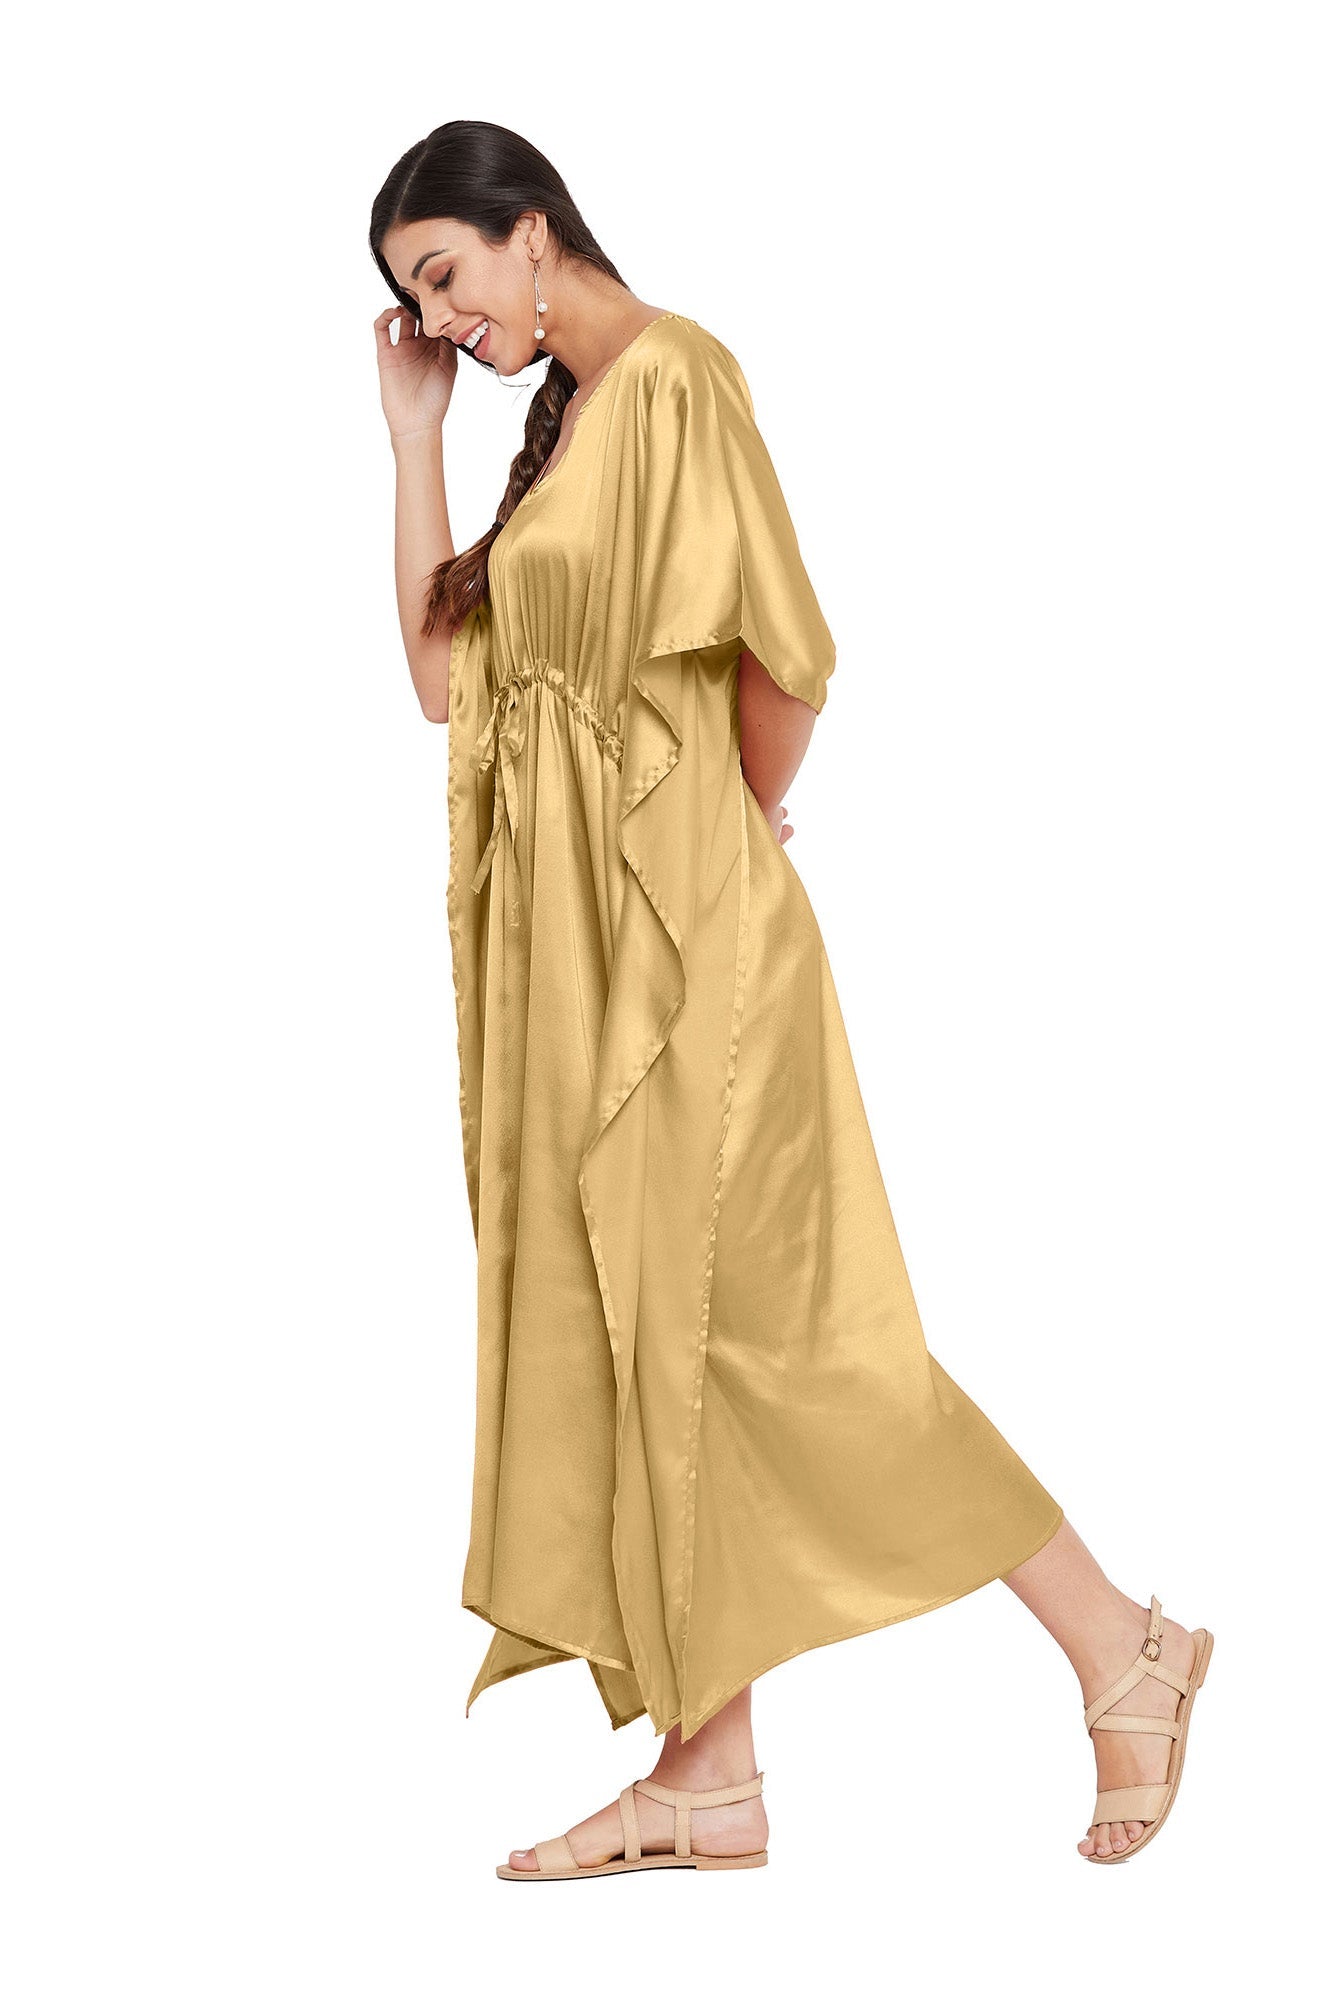 Golden Solid Satin Dress: Glamorous Ethnic Style